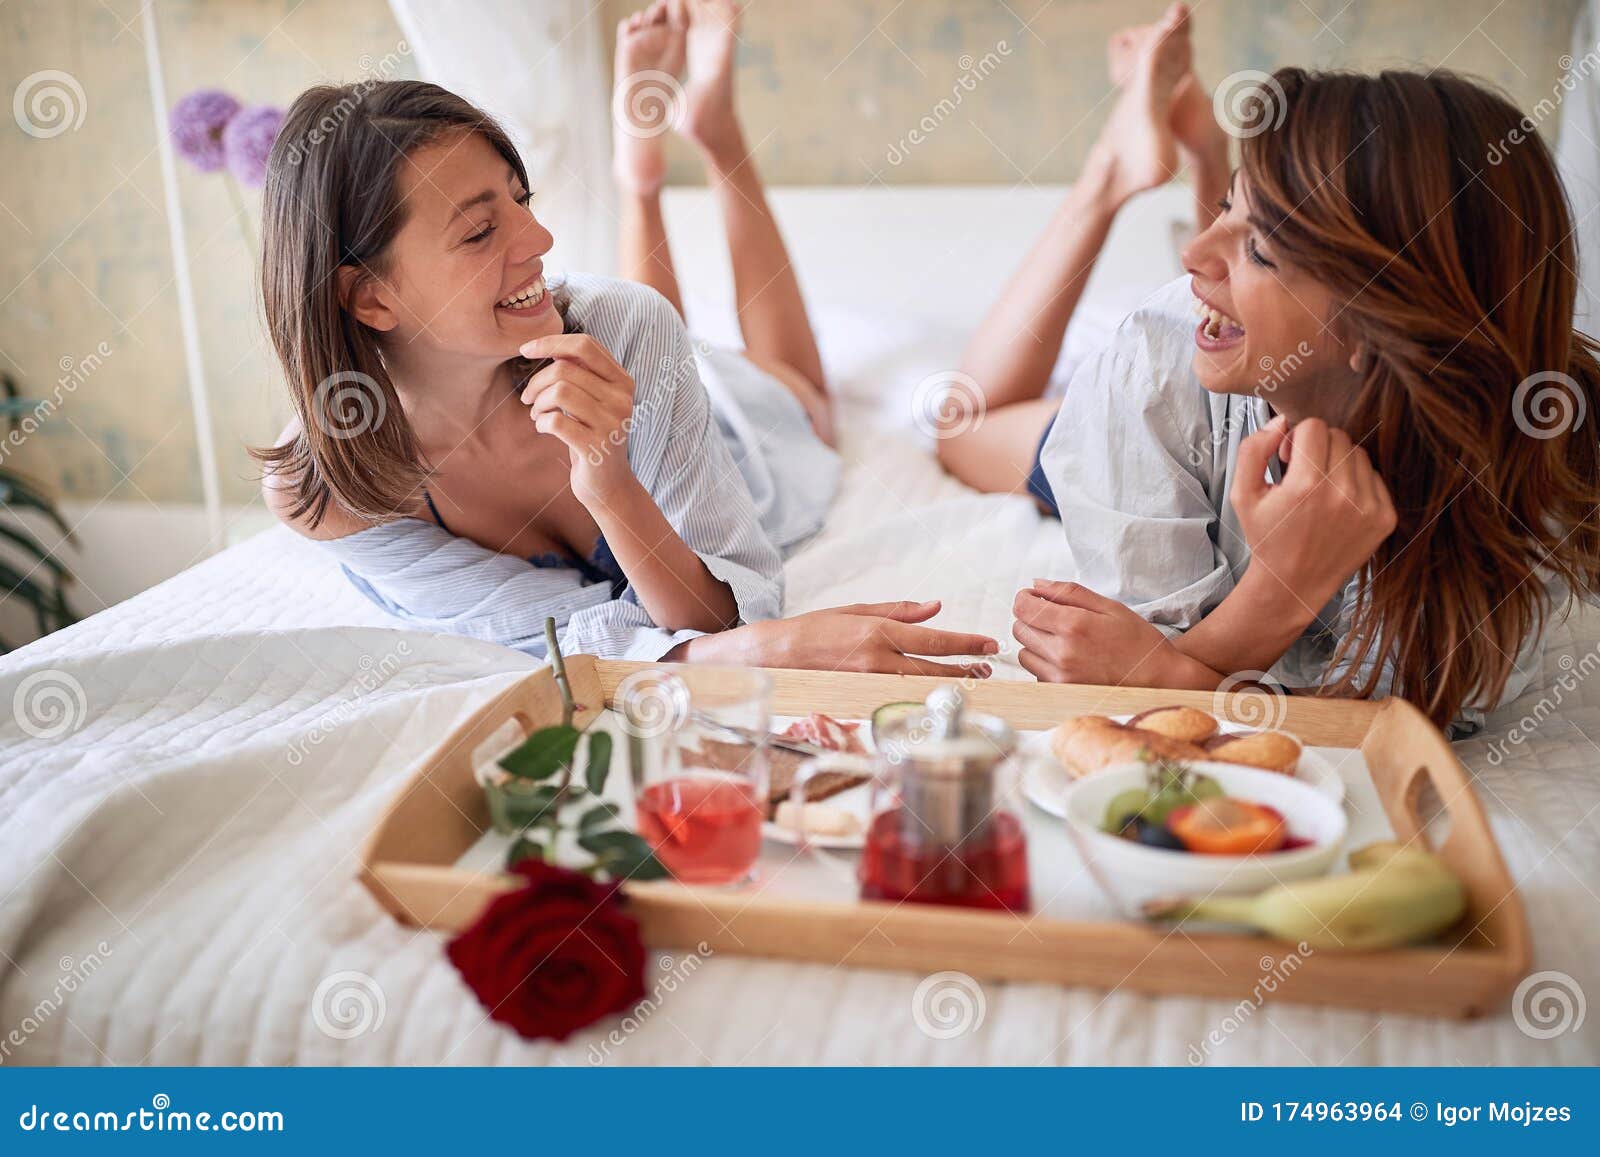 lesbians sitting legs crossed breakfast bed talking smiling watching each other love lesbian couple romantic breakfast 174963964